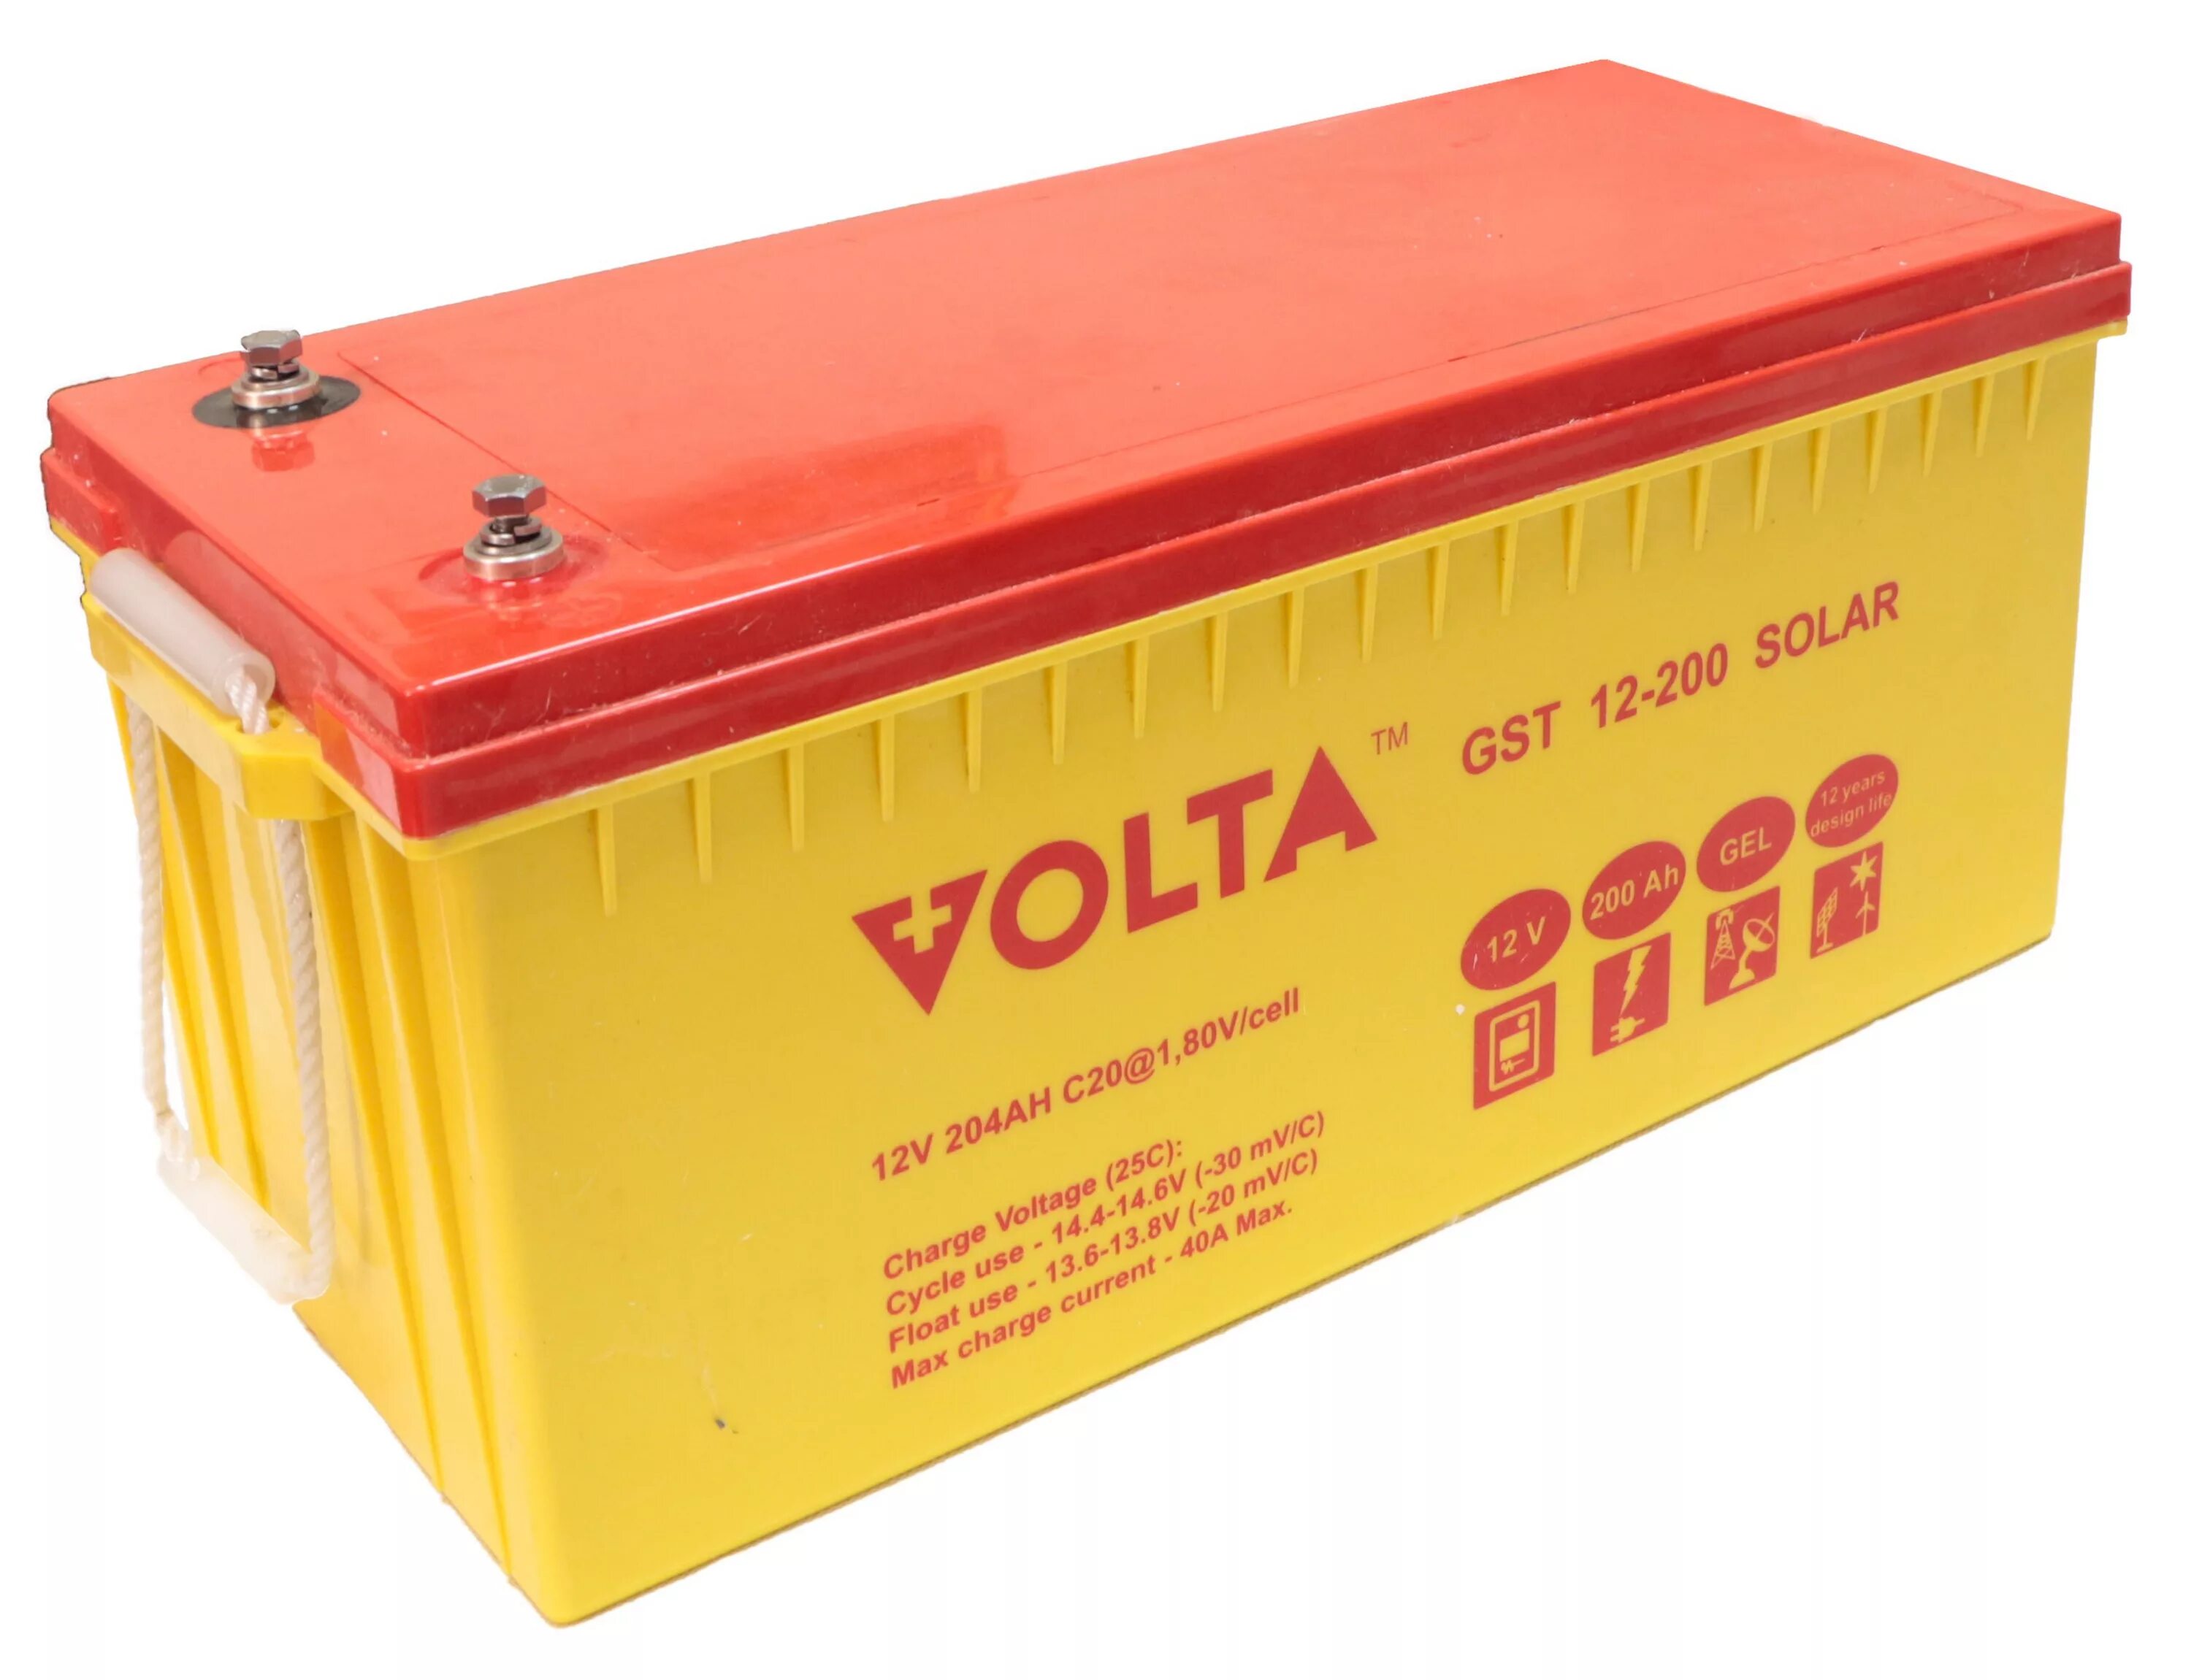 Аккумулятор для солнечных батарей 12. Volta GST 12-200 Solar. Аккумулятор «volta GST 12-200 Solar». St 12-150 аккумулятор volta. Аккумулятор Gel 12-200.